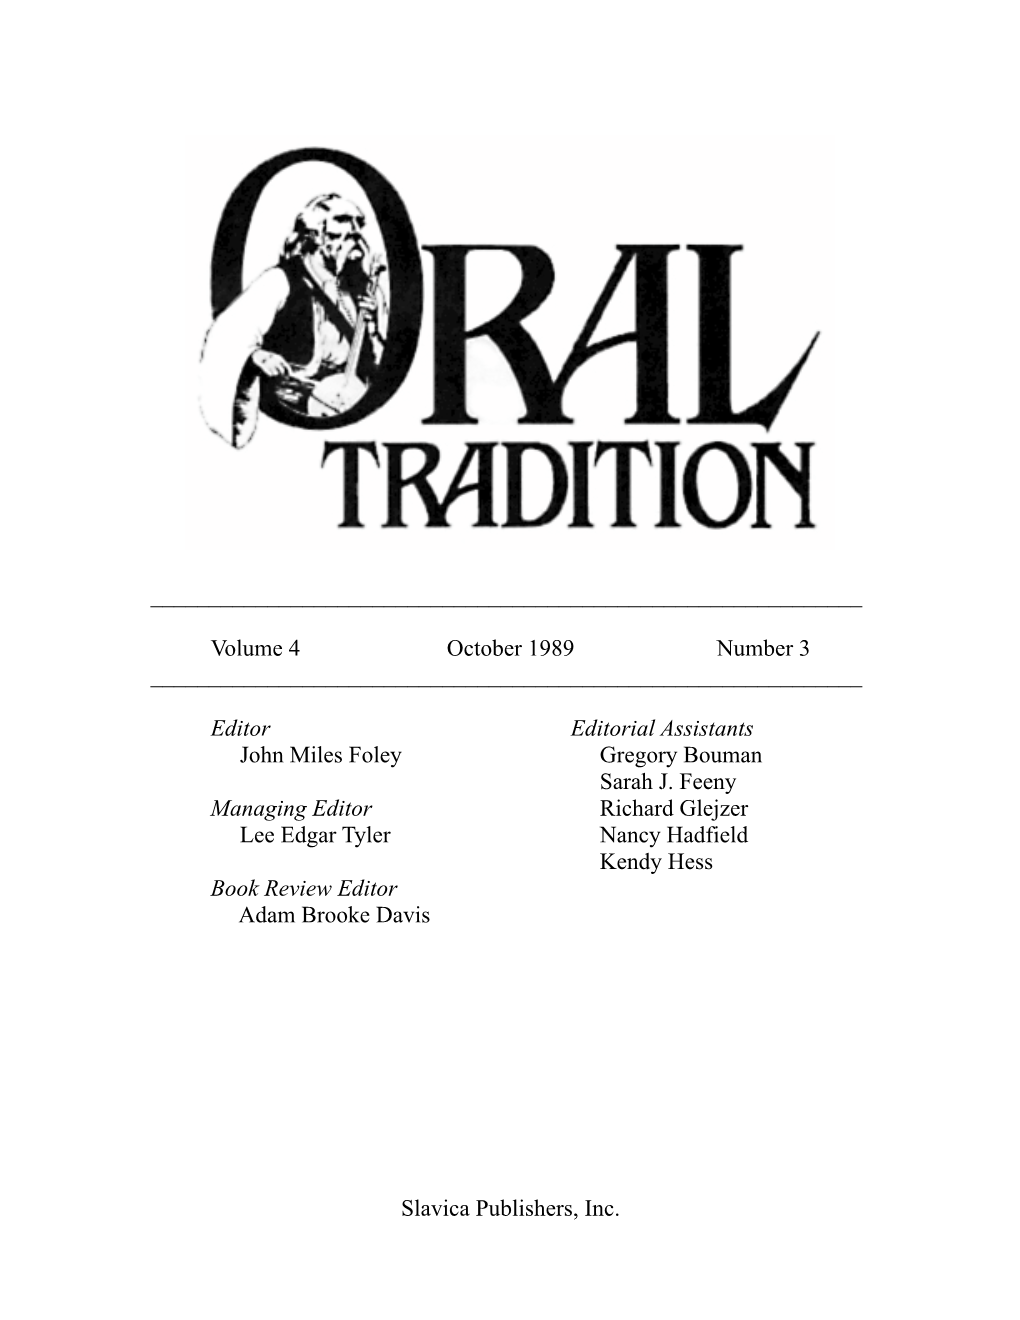 Oral Tradition